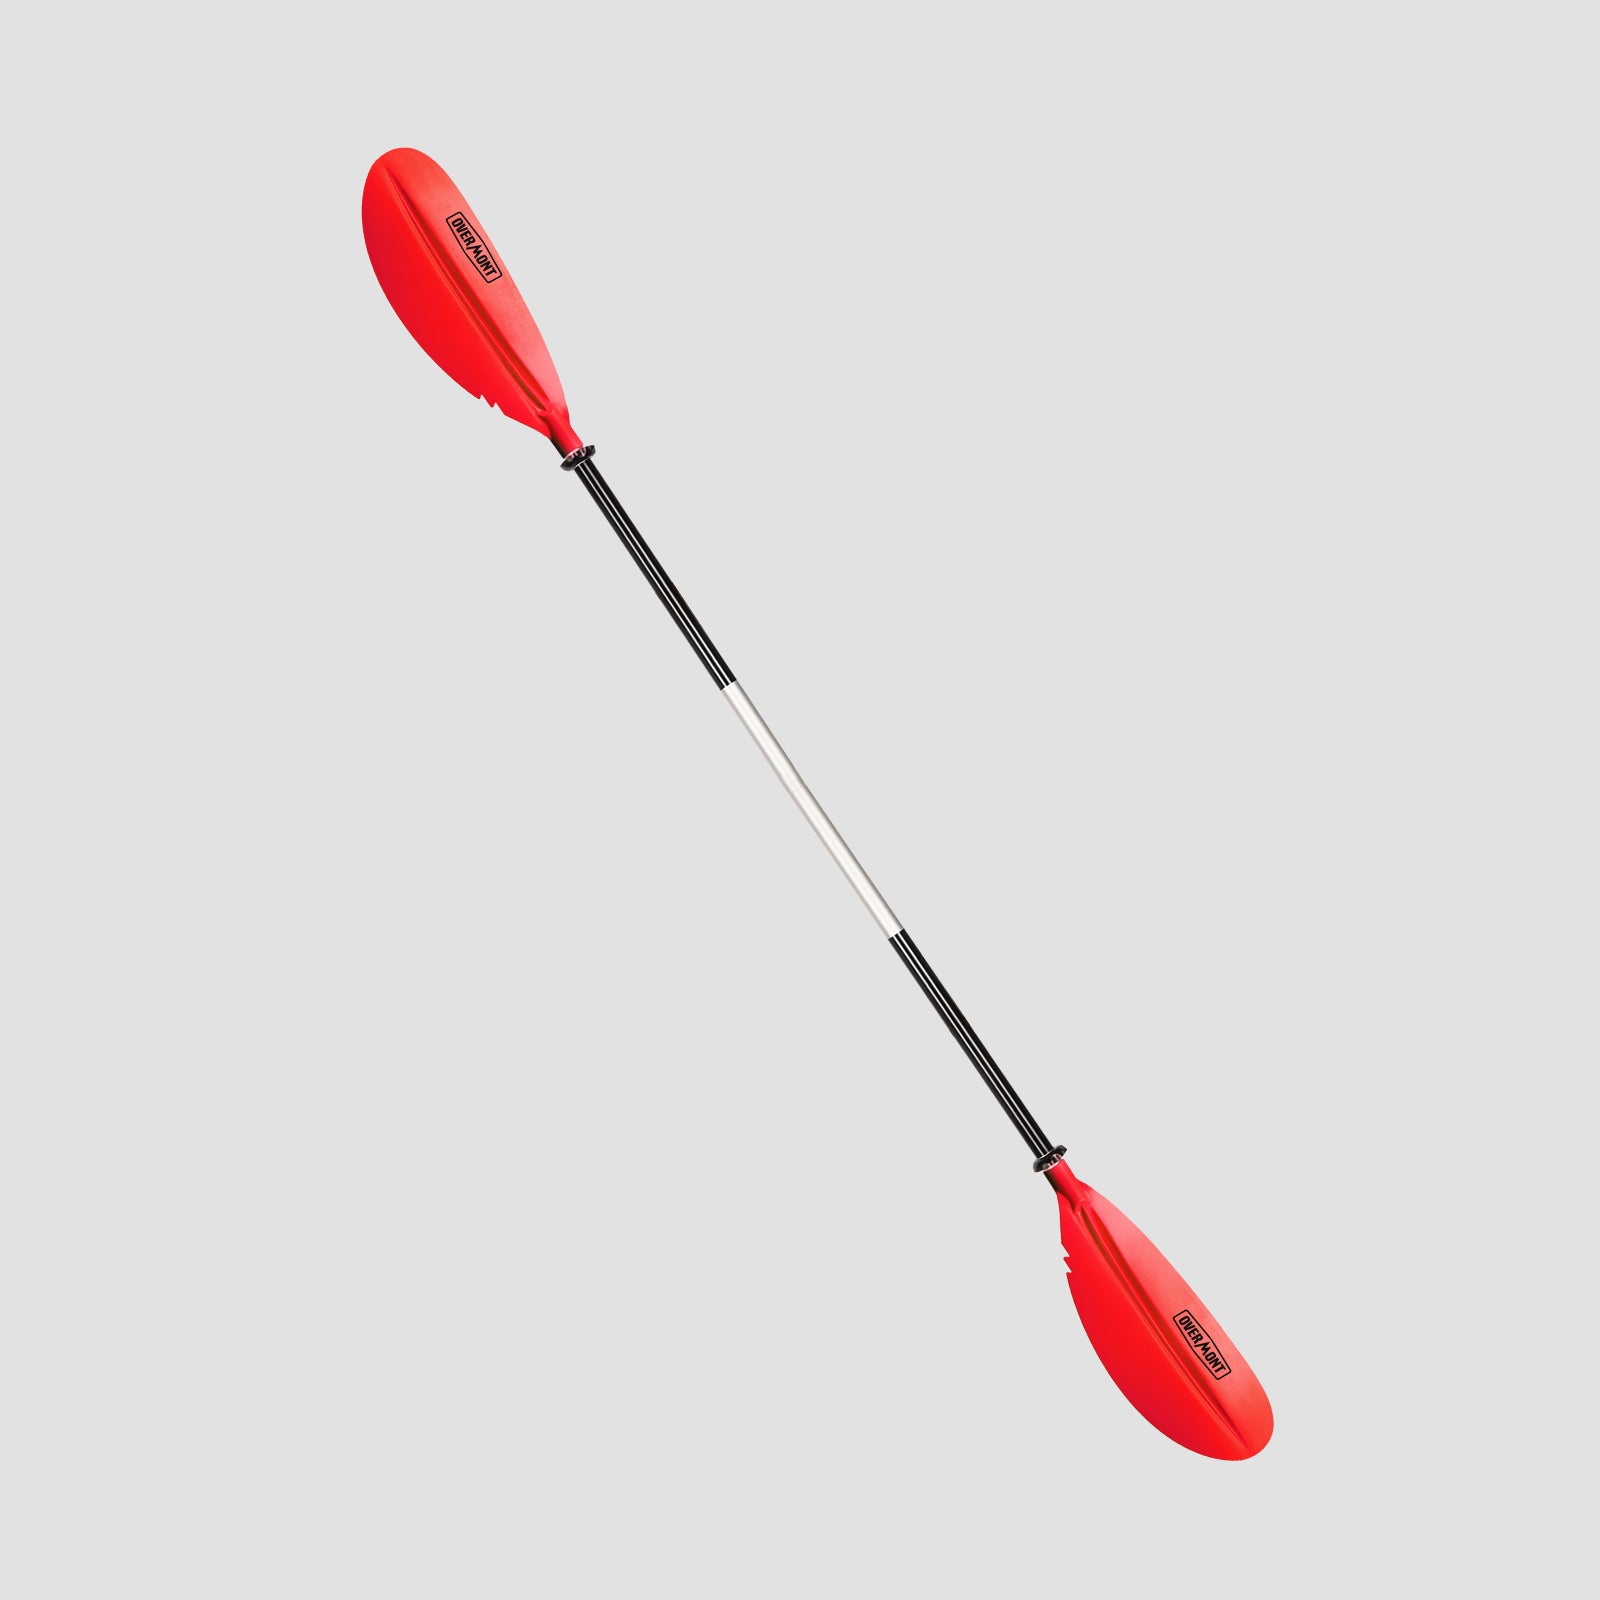 Red alloy kayak paddles